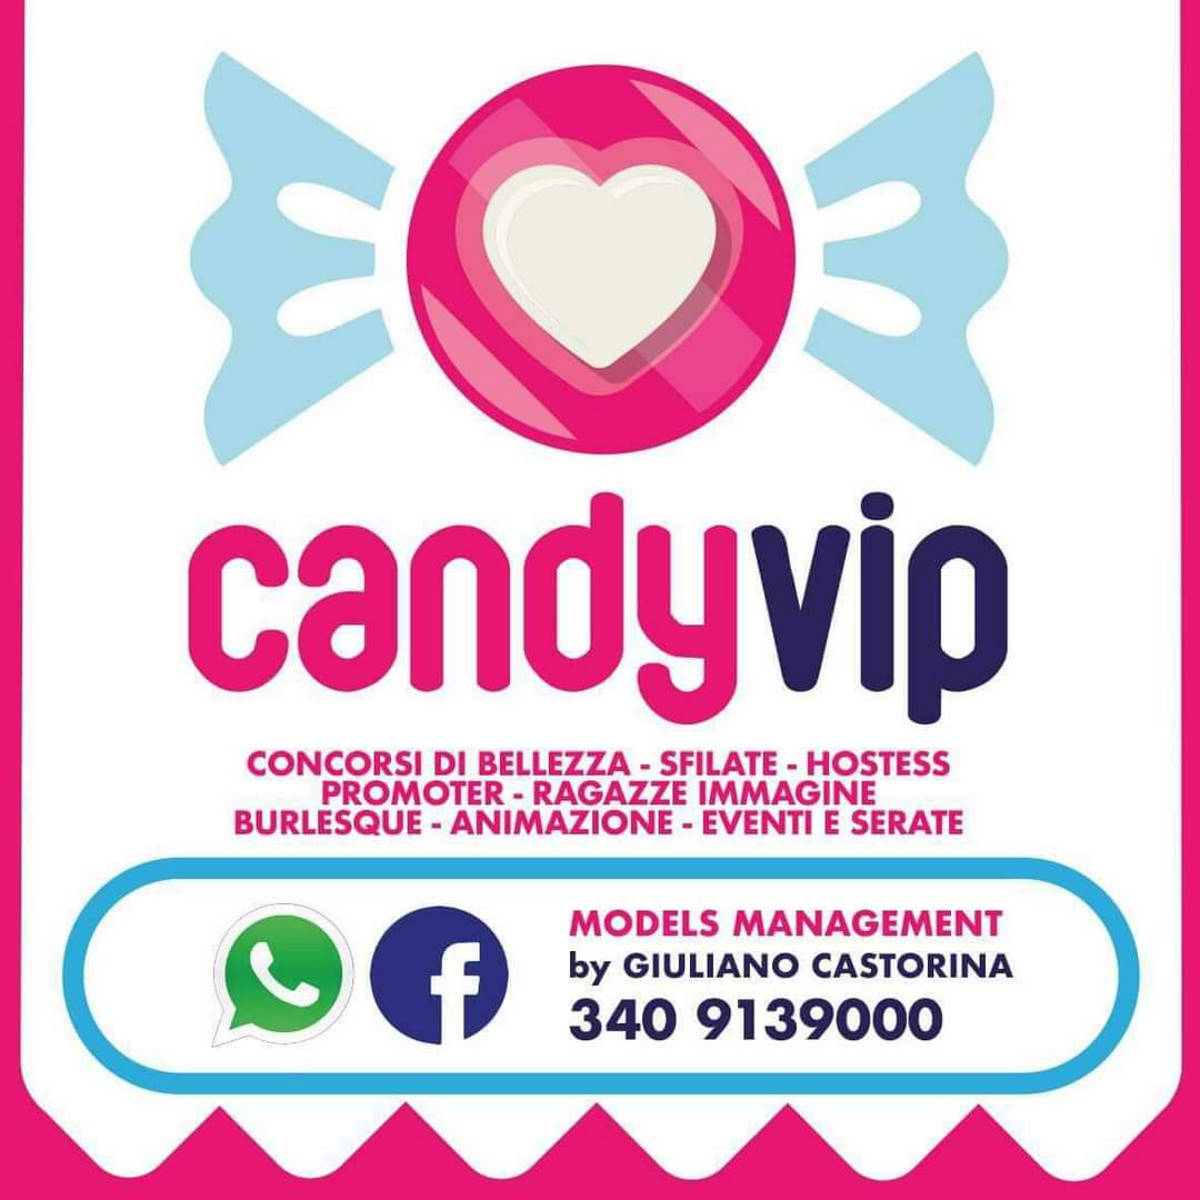 Catania – Vivace partecipazione al casting “Candy V.I.P. Models”